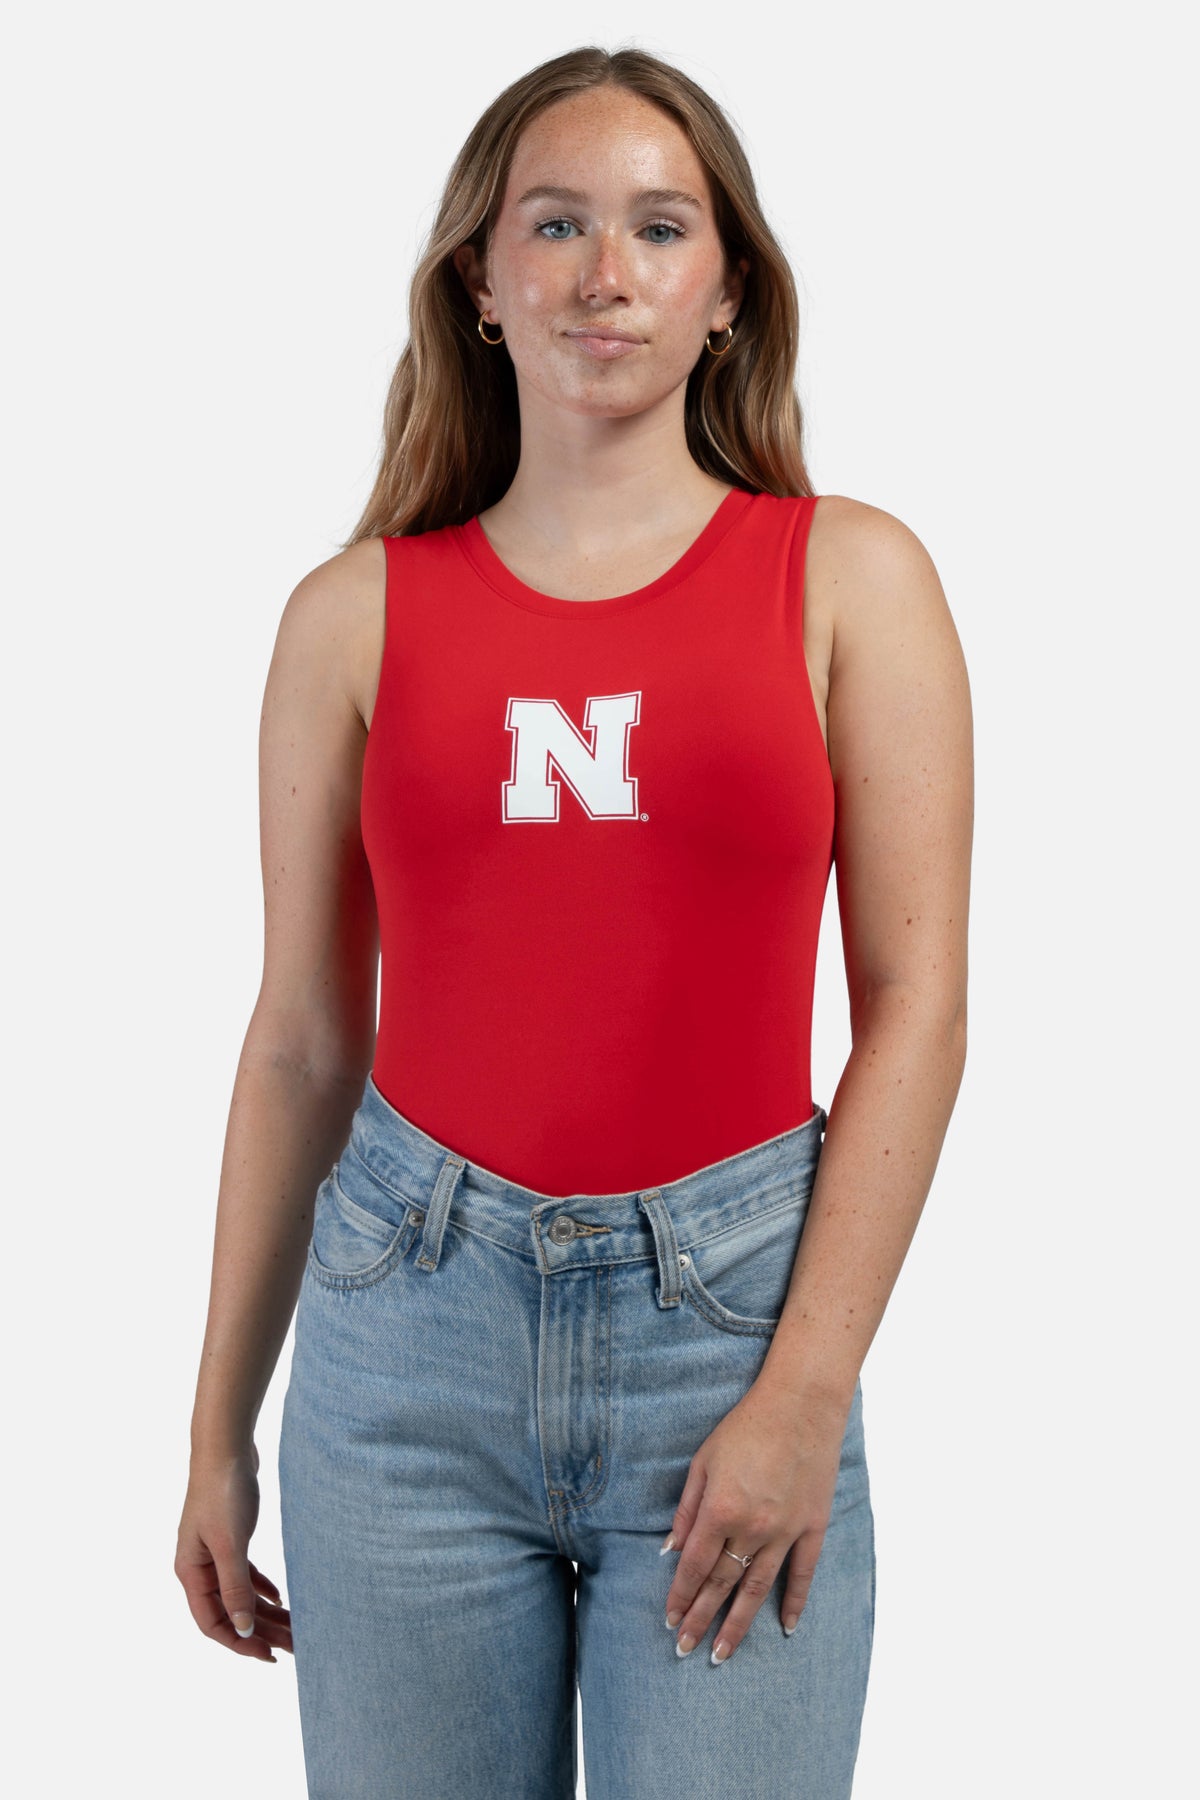 University of Nebraska Contouring Bodysuit